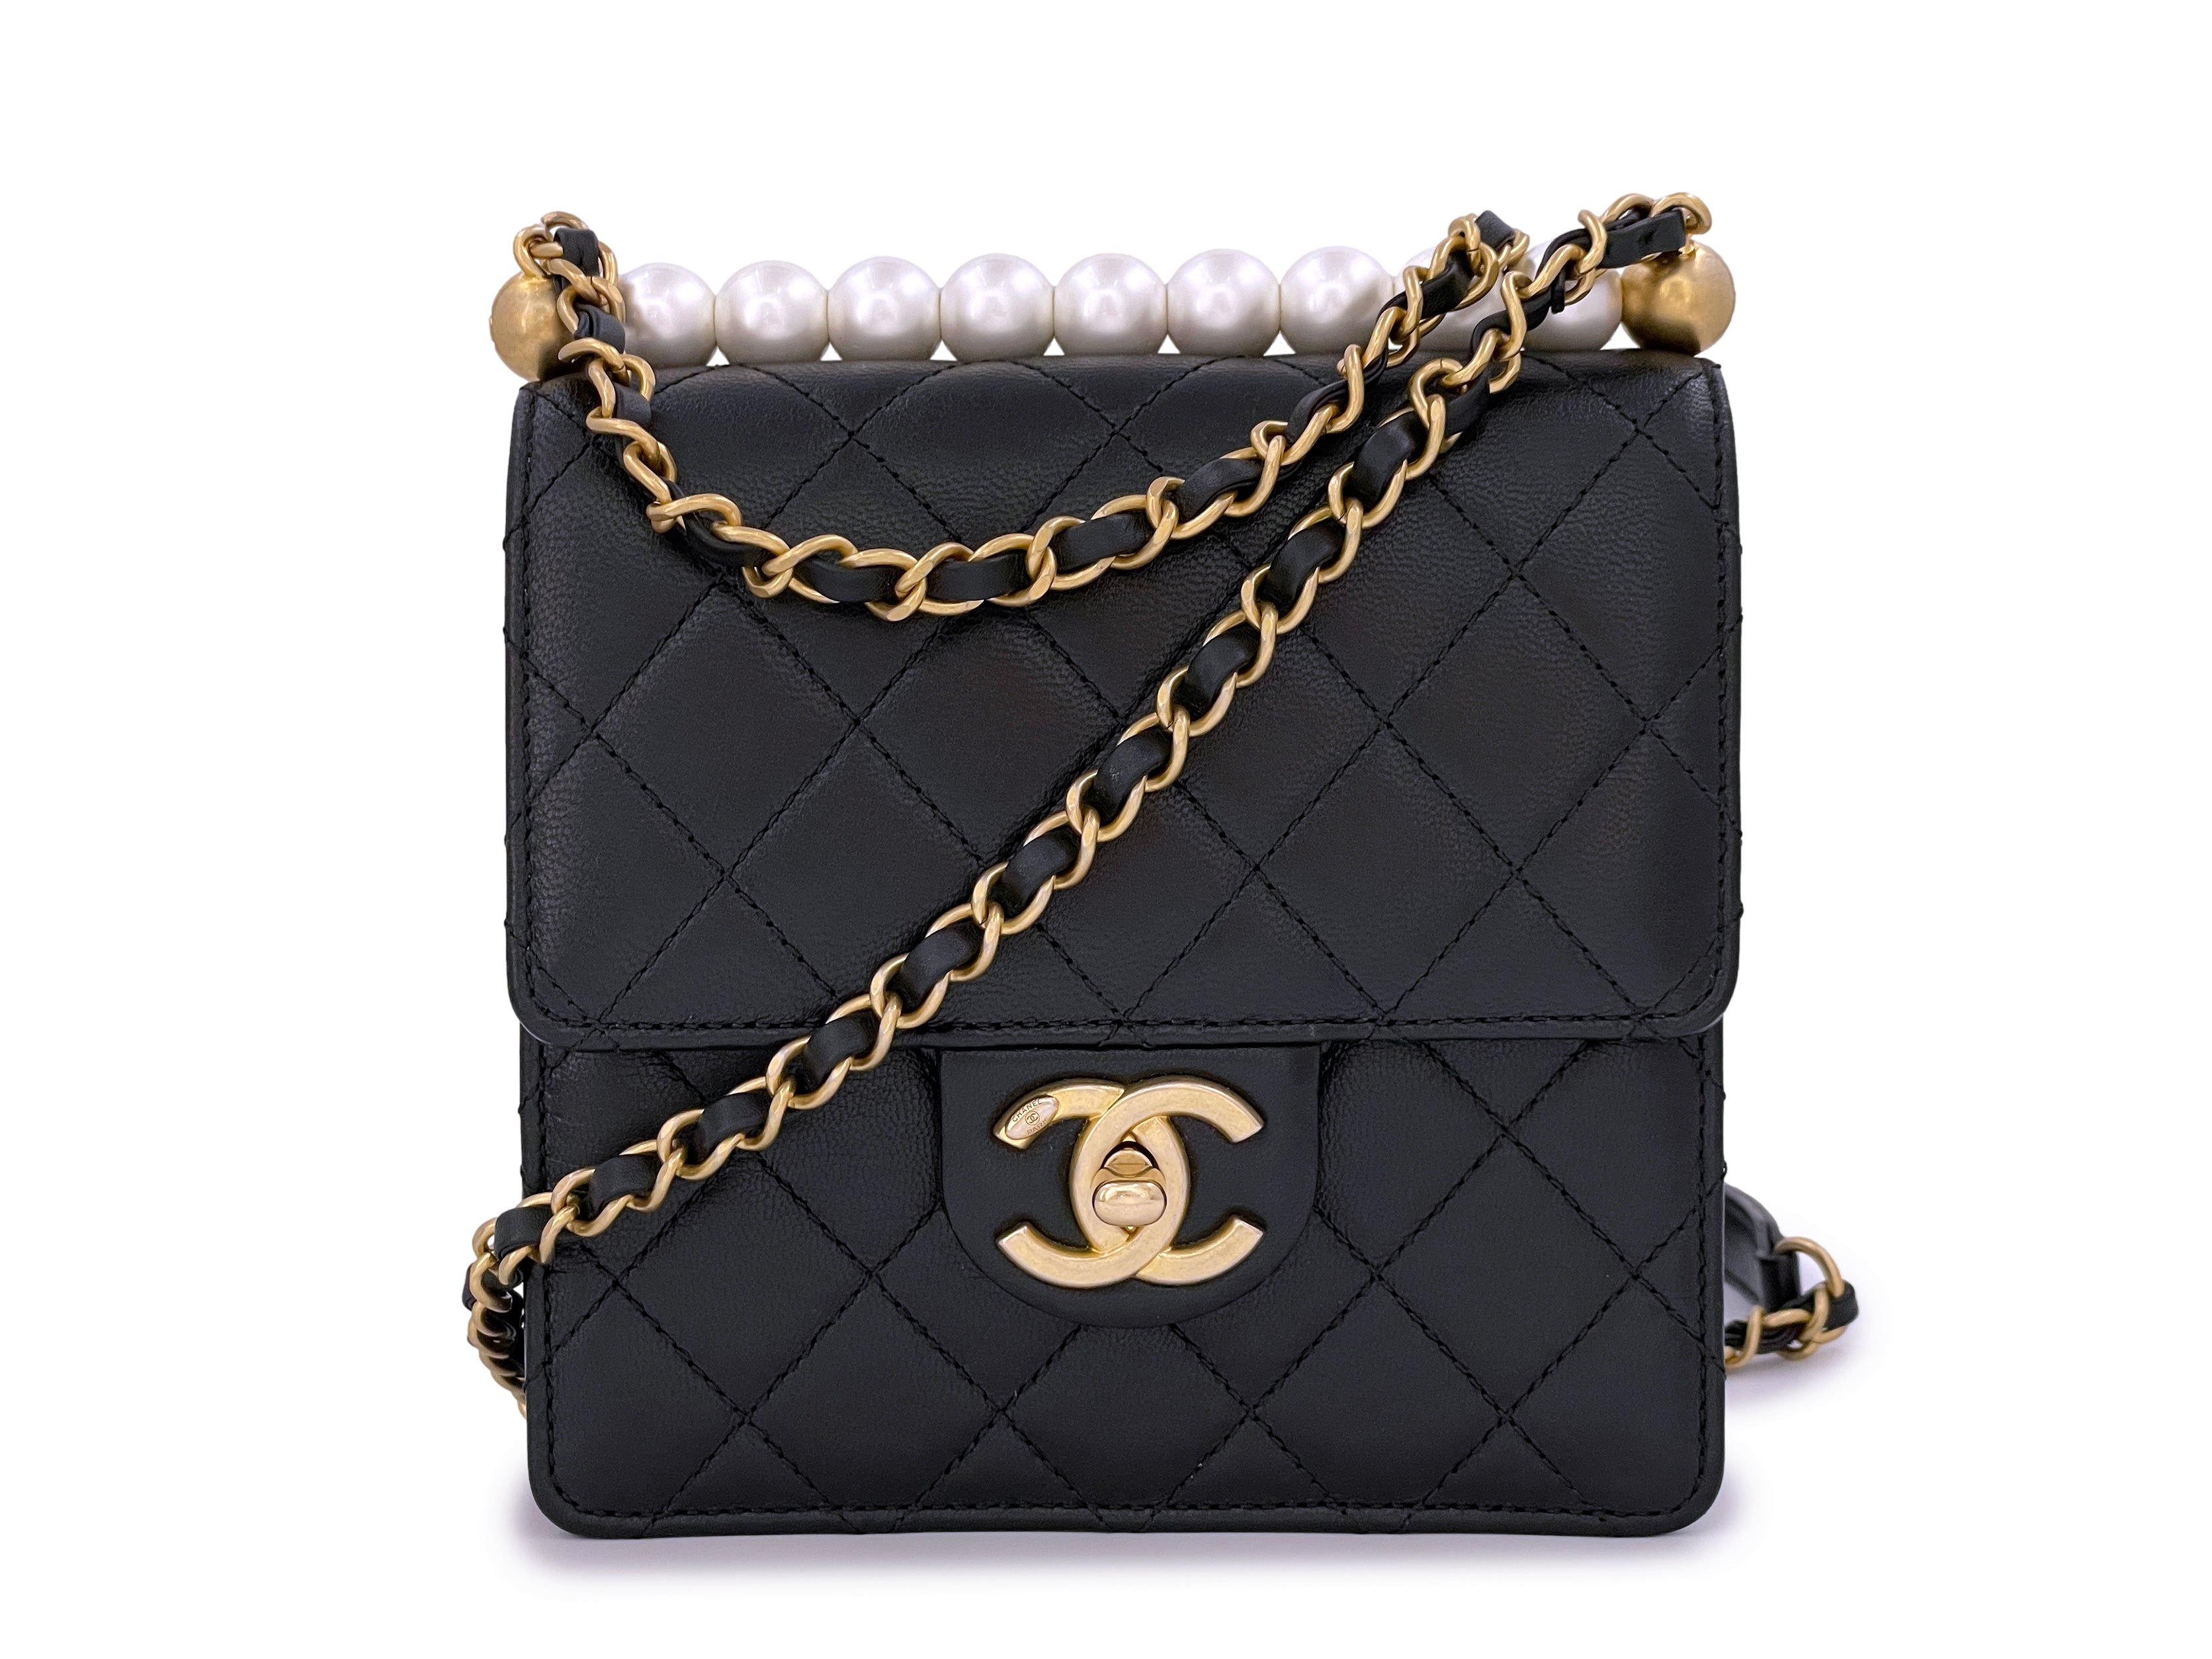 Chanel 19 Flap Bag Price List - Brands Blogger